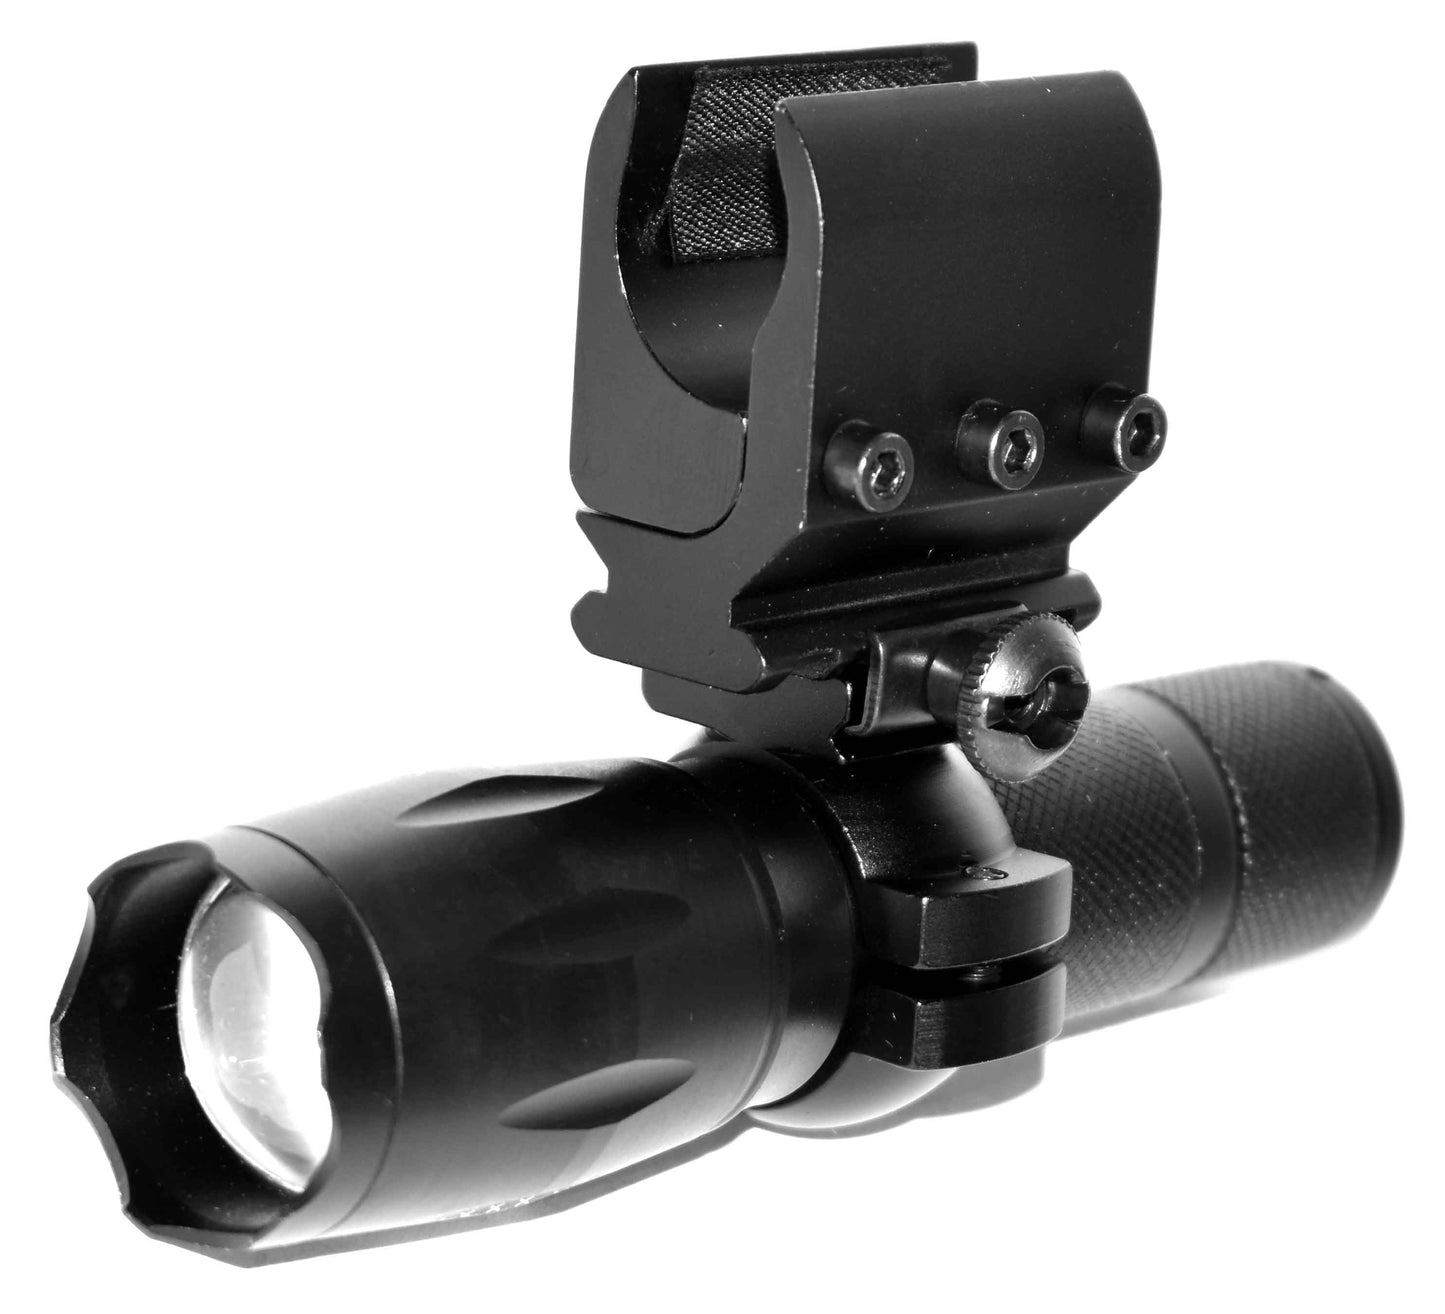 Stoeger p3000 12 gauge pump flashlight with mount combo aluminum black.